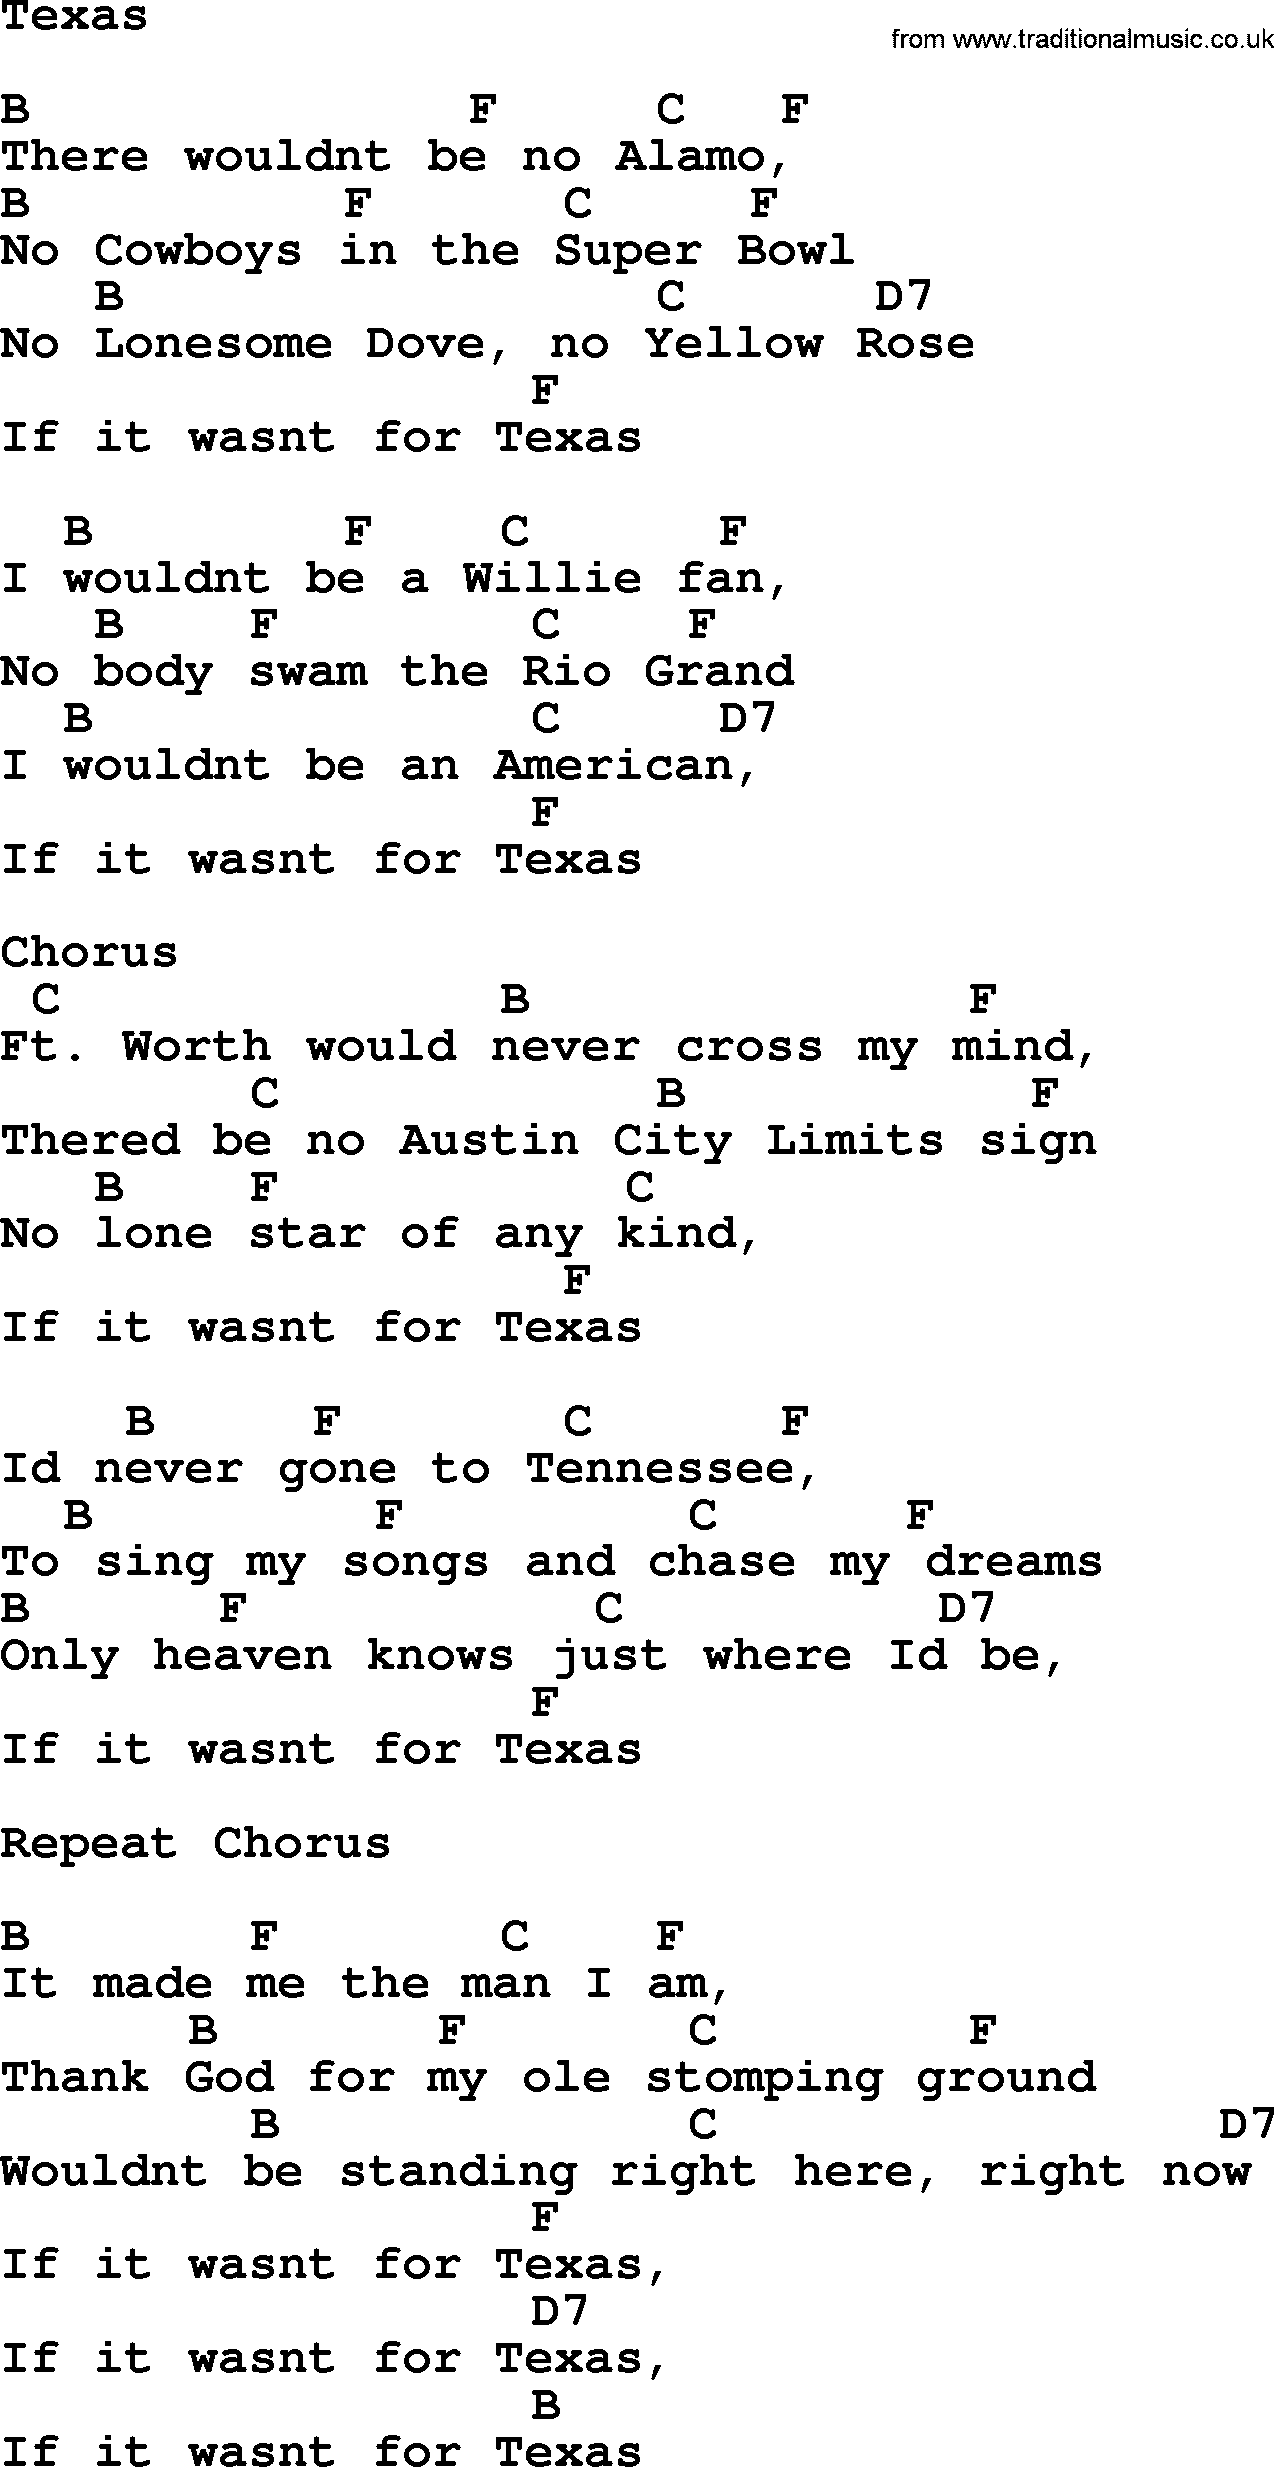 George Strait song: Texas, lyrics and chords